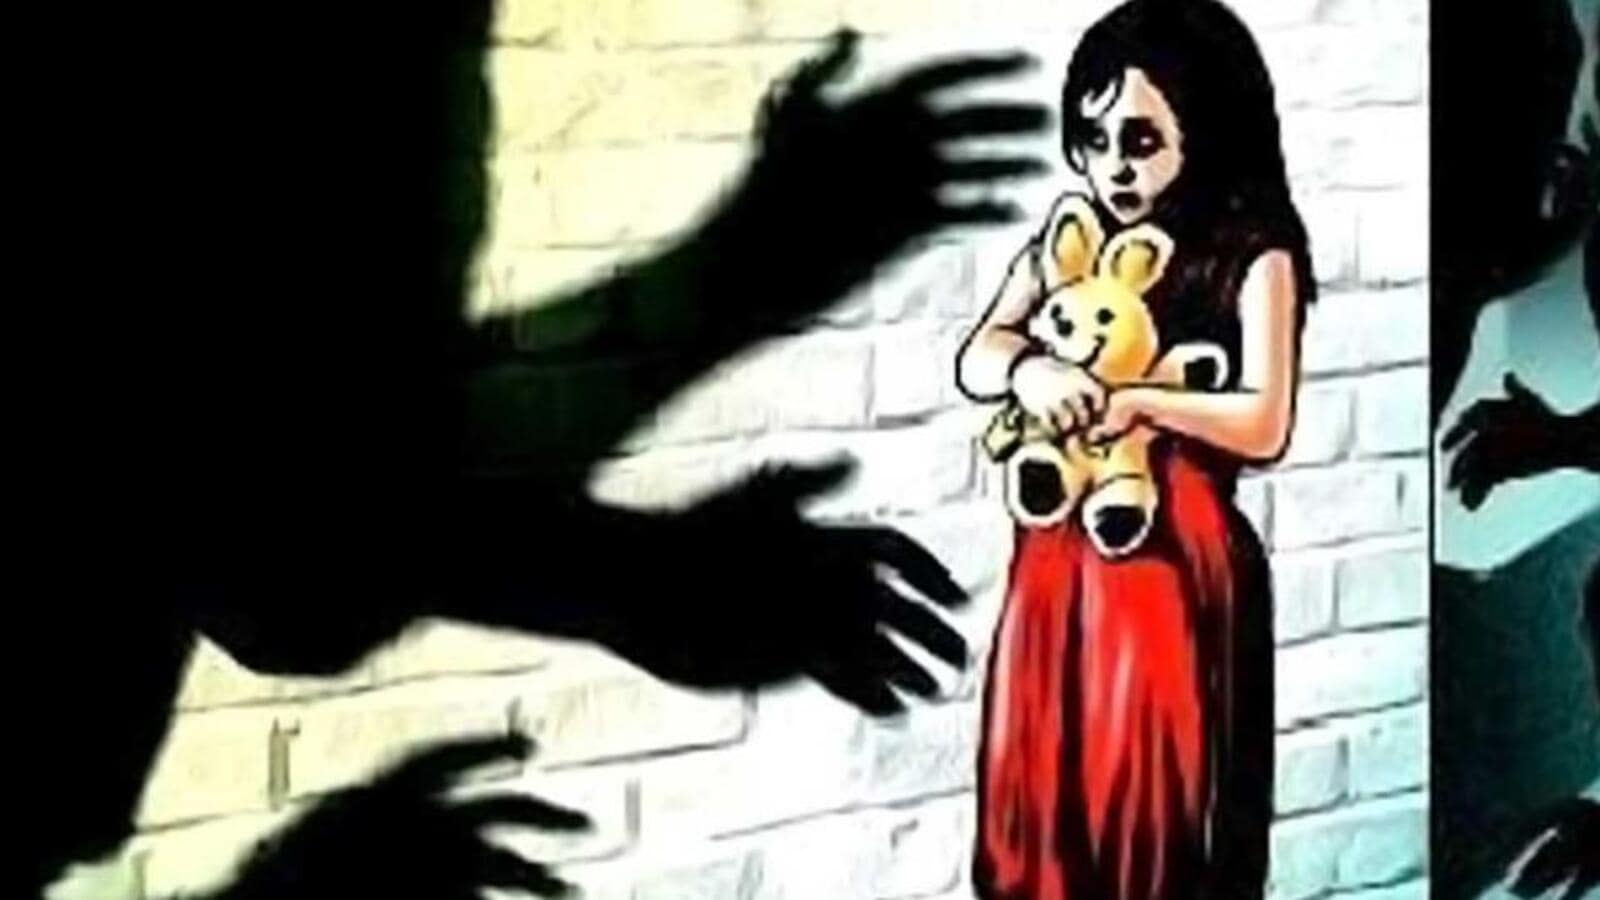 Buti Full Girl Saadi Rape Xxx Video - 8 men rape, film and blackmail 17-year-old Rajasthan girl. Then release  video - Hindustan Times